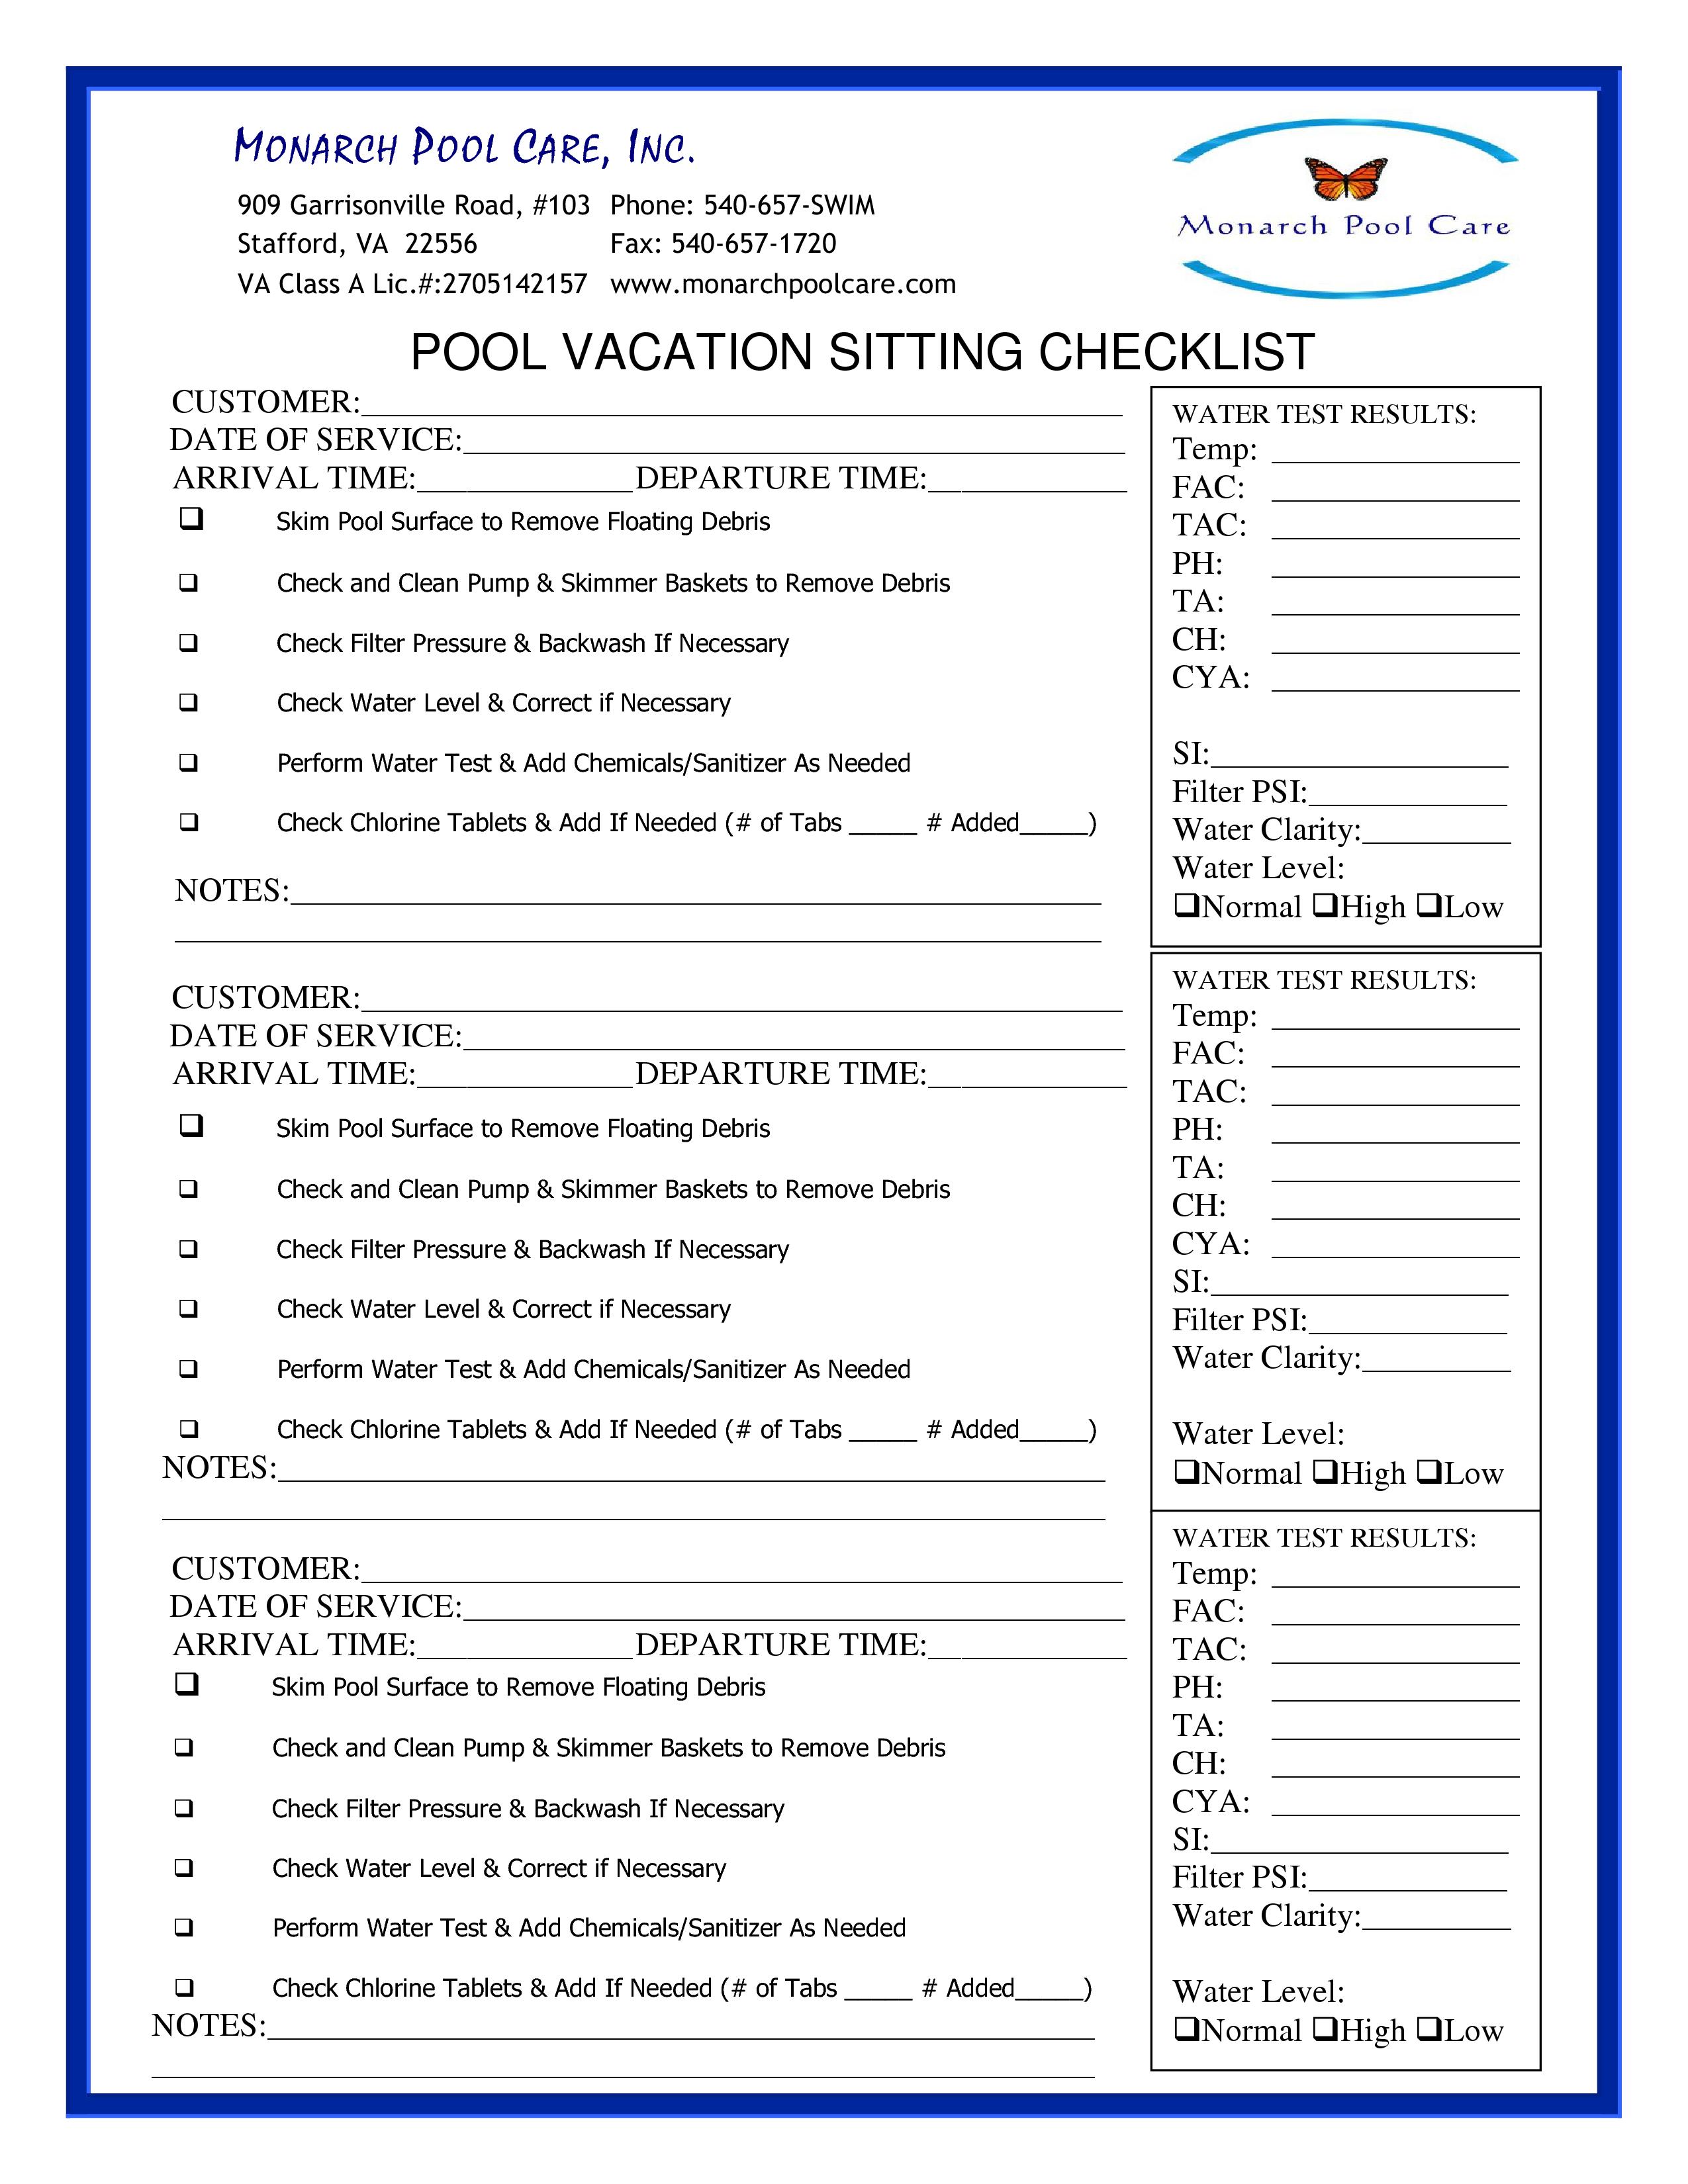 mpc-pool-vacation-sitting-checklist-2018-monarch-pools